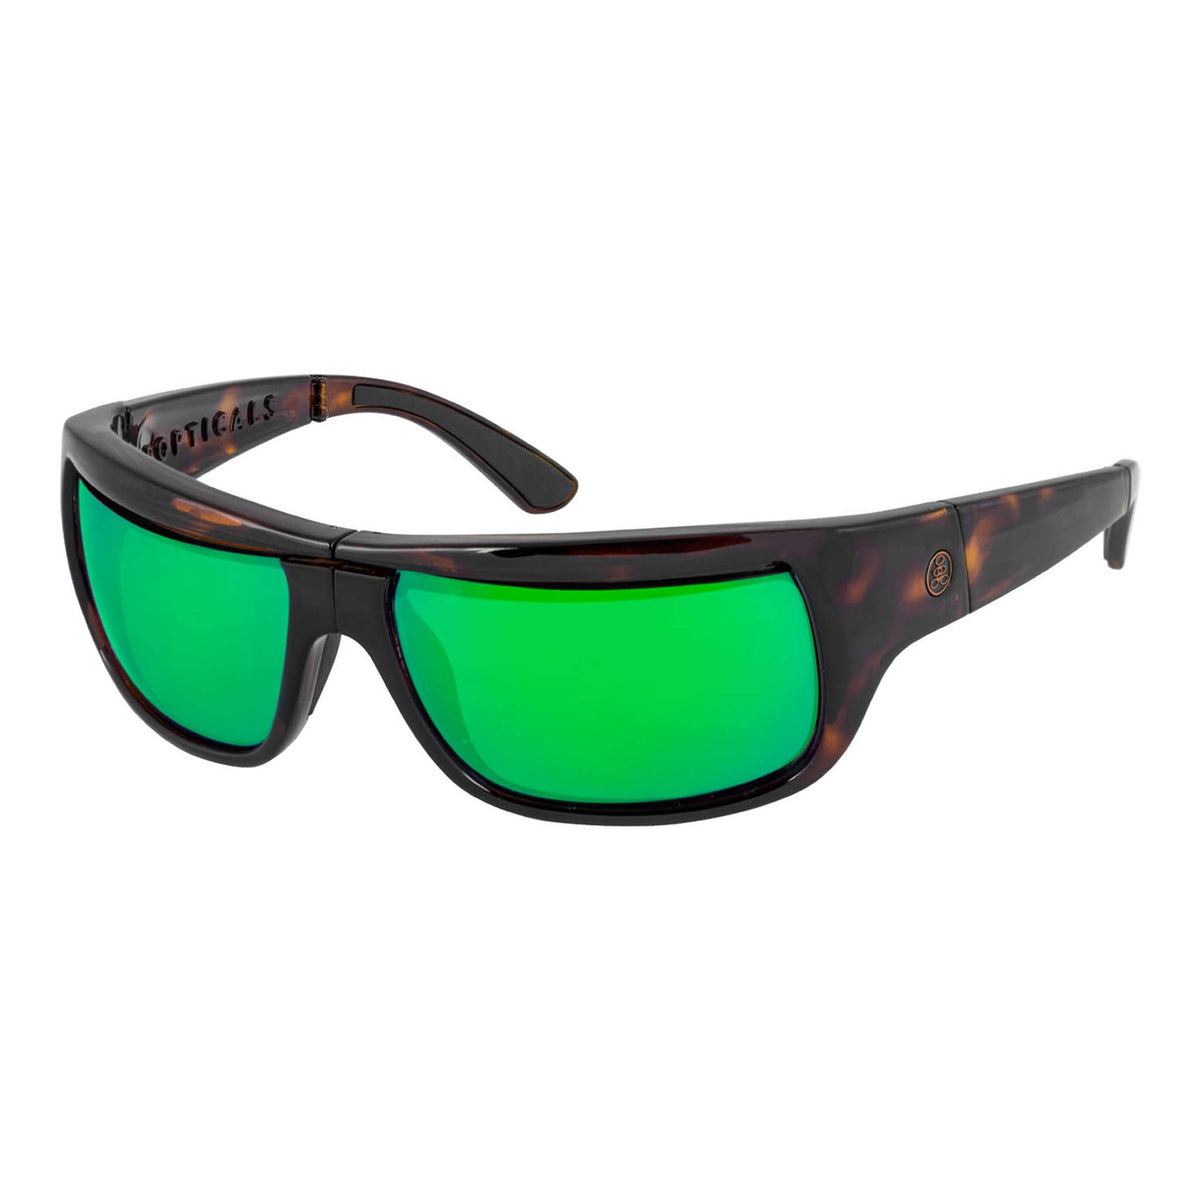 Popticals, Premium Compact Sunglasses, PopH2O, 010070-CTEN, Polarized Sunglasses, Gloss Tortoise Frame, Gray Lenses w/Green Mirror Finish, Glam View